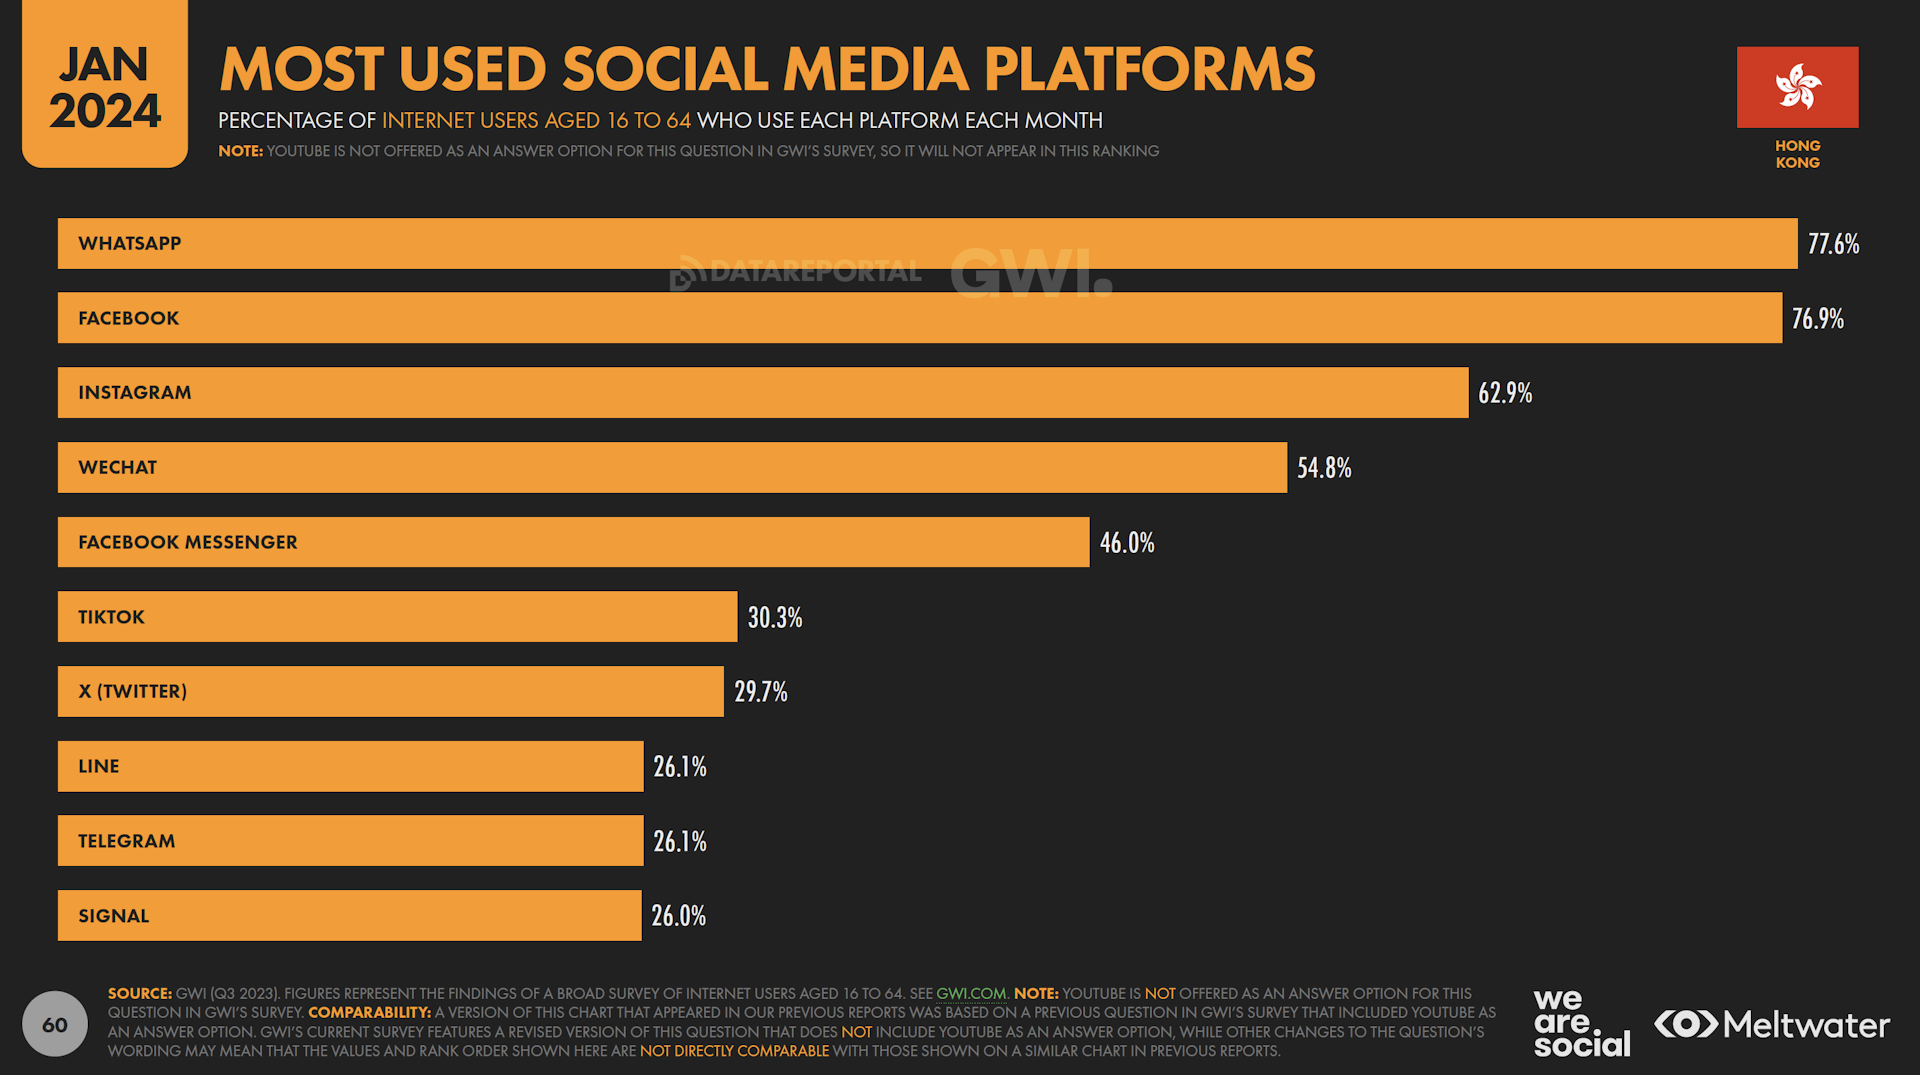 Most used social media platforms based on Global Digital Report 2024 for Hong Kong